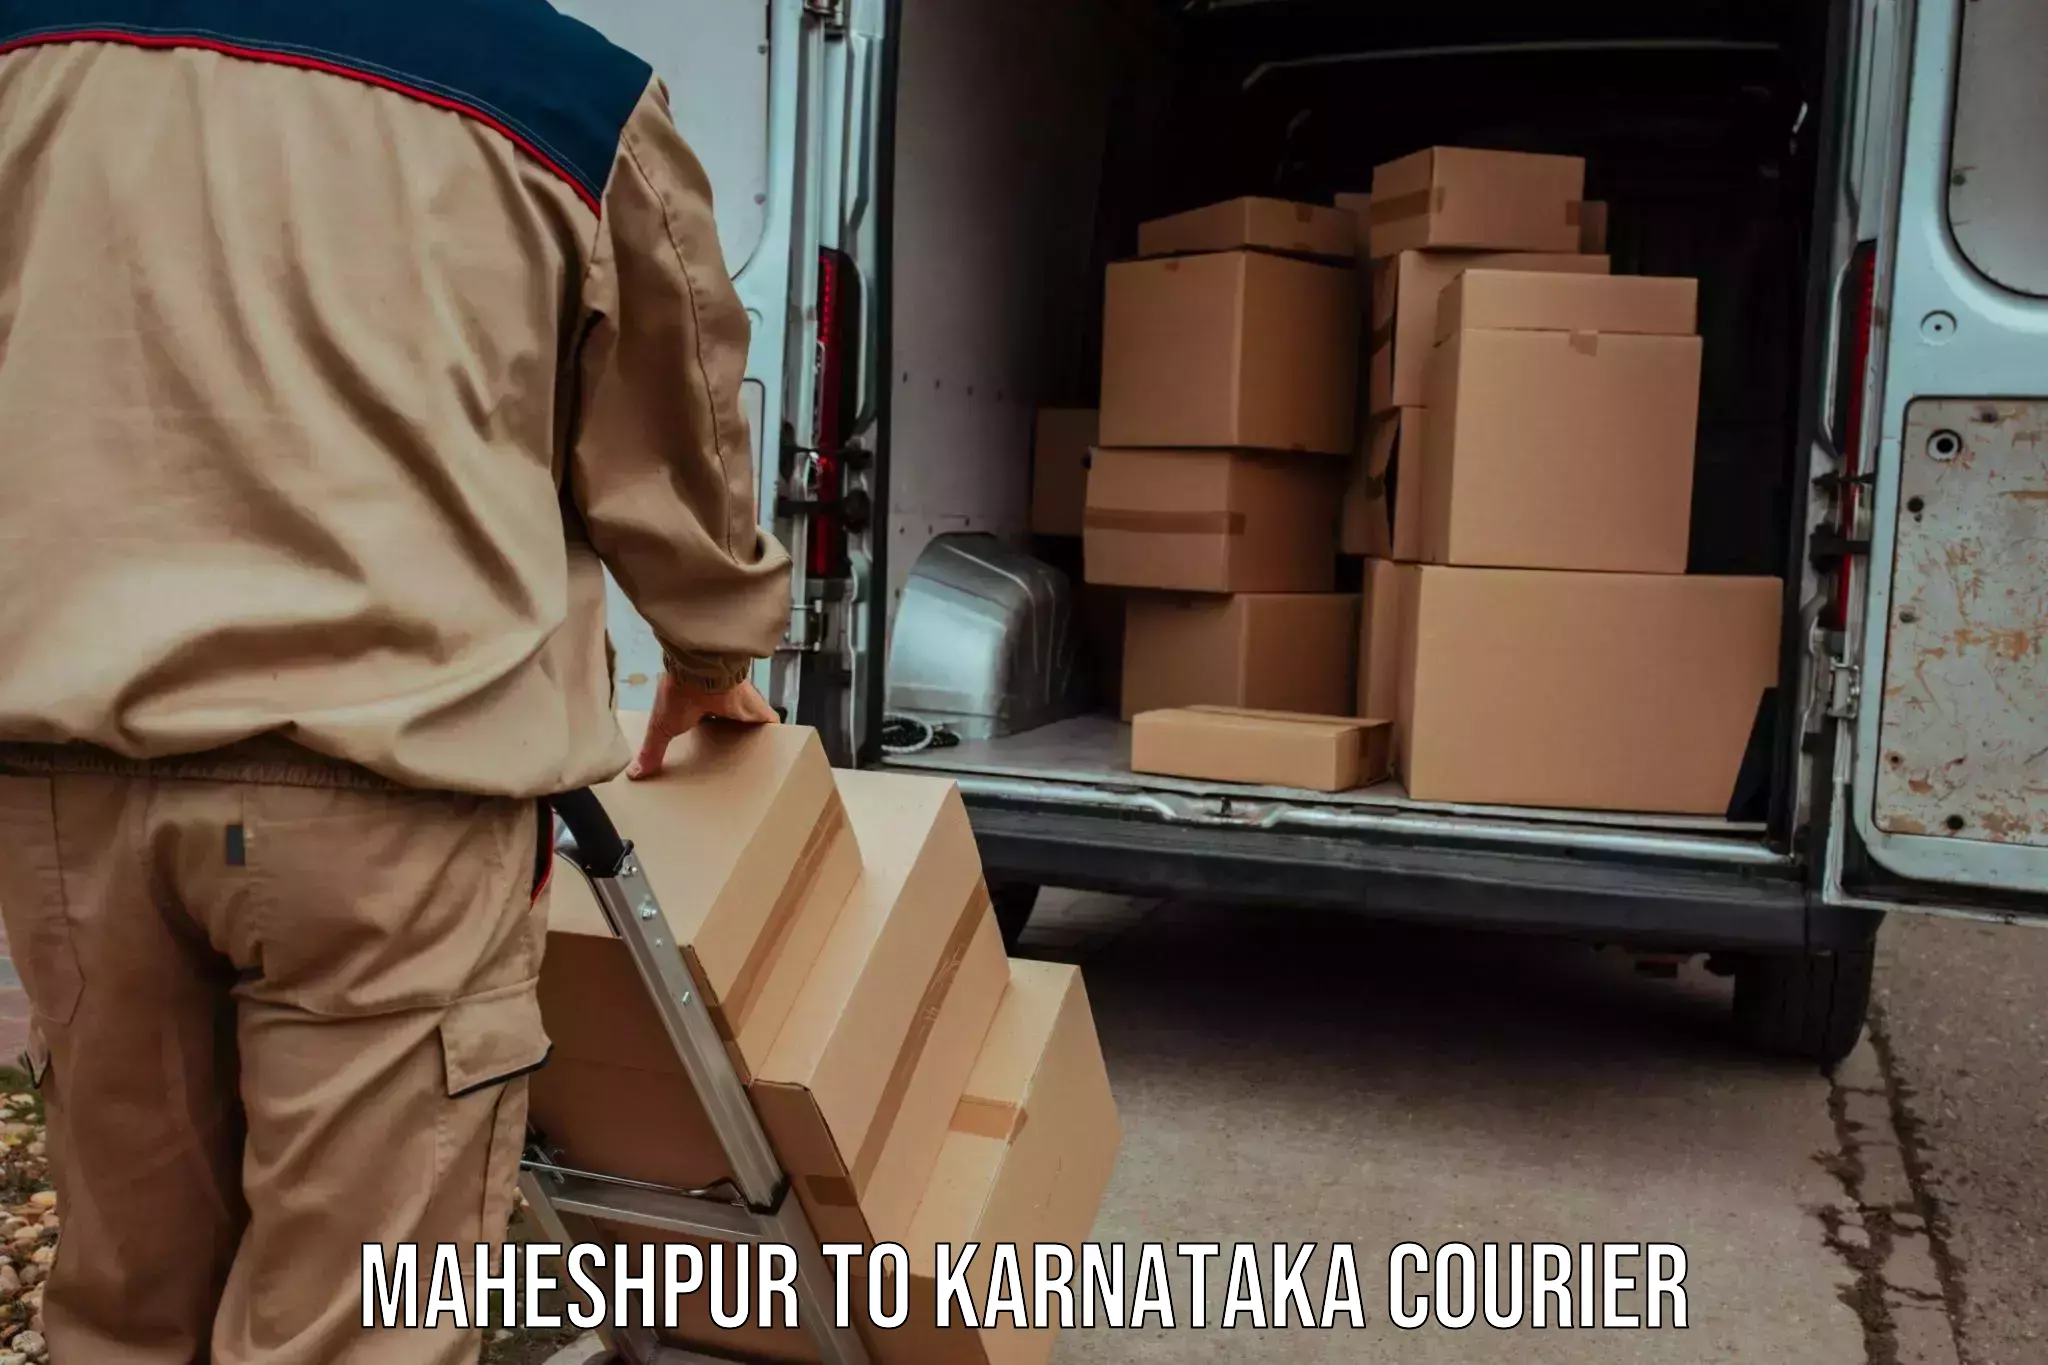 Enhanced delivery experience Maheshpur to Kanjarakatte